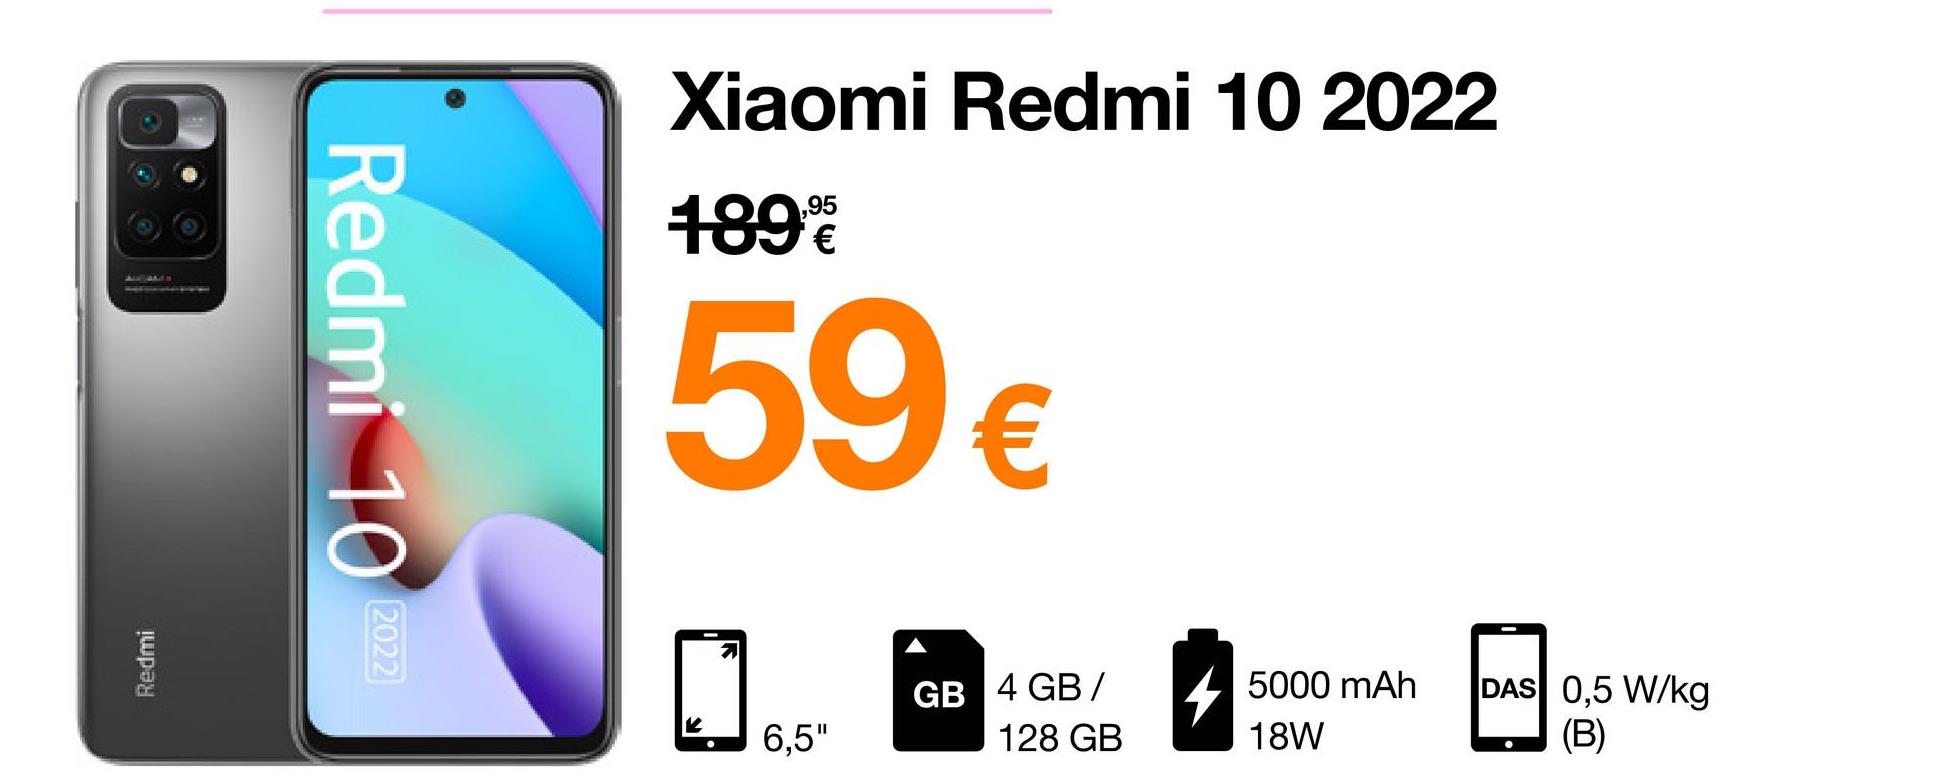 ALL ALES
Redmi
Redmi 10
2022
Xiaomi Redmi 10 2022
189.90€
59 €
6,5"
GB 4 GB/
128 GB
5000 mAh
18W
DAS 0,5 W/kg
(B)